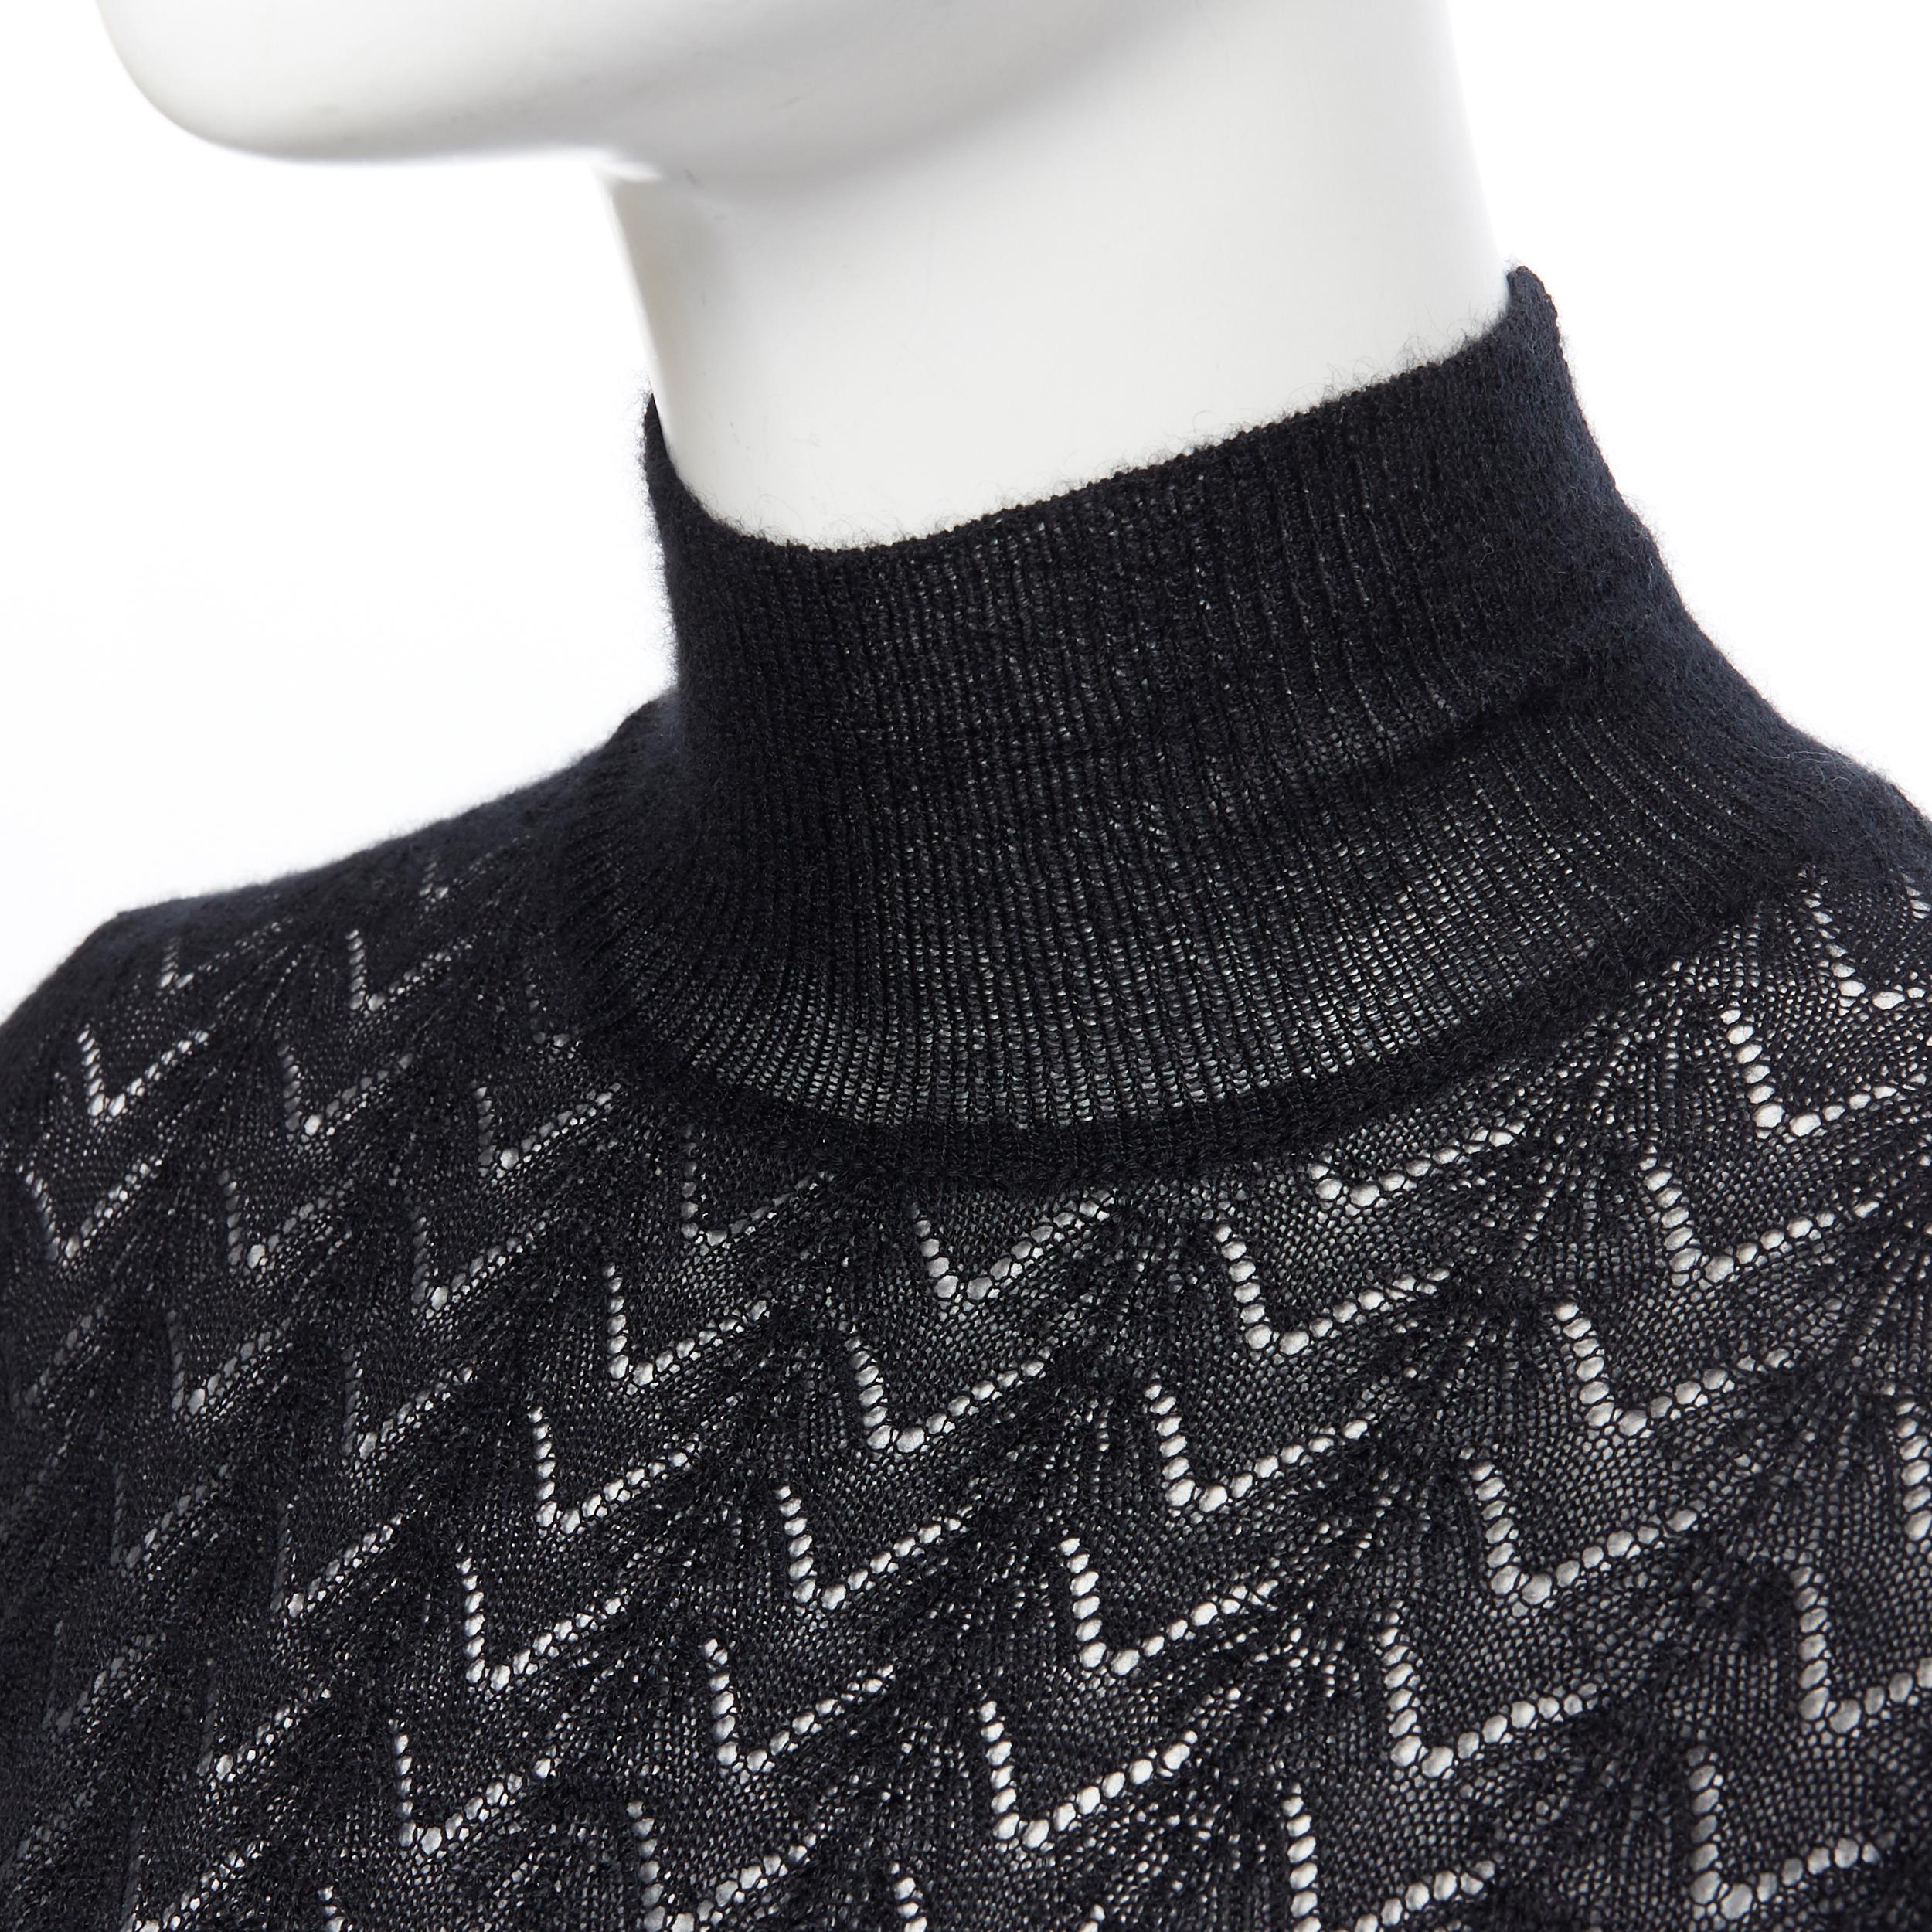 LOUIS VUITTON 100% cashmere black lace loose knit  turtleneck sweater top M
Brand: Louis Vuitton
Model Name / Style: Cashmere turtleneck
Material: Cashmere
Color: Black
Pattern: Geometric
Extra Detail: Long sleeve. Turtleneck neckline.
Made in: